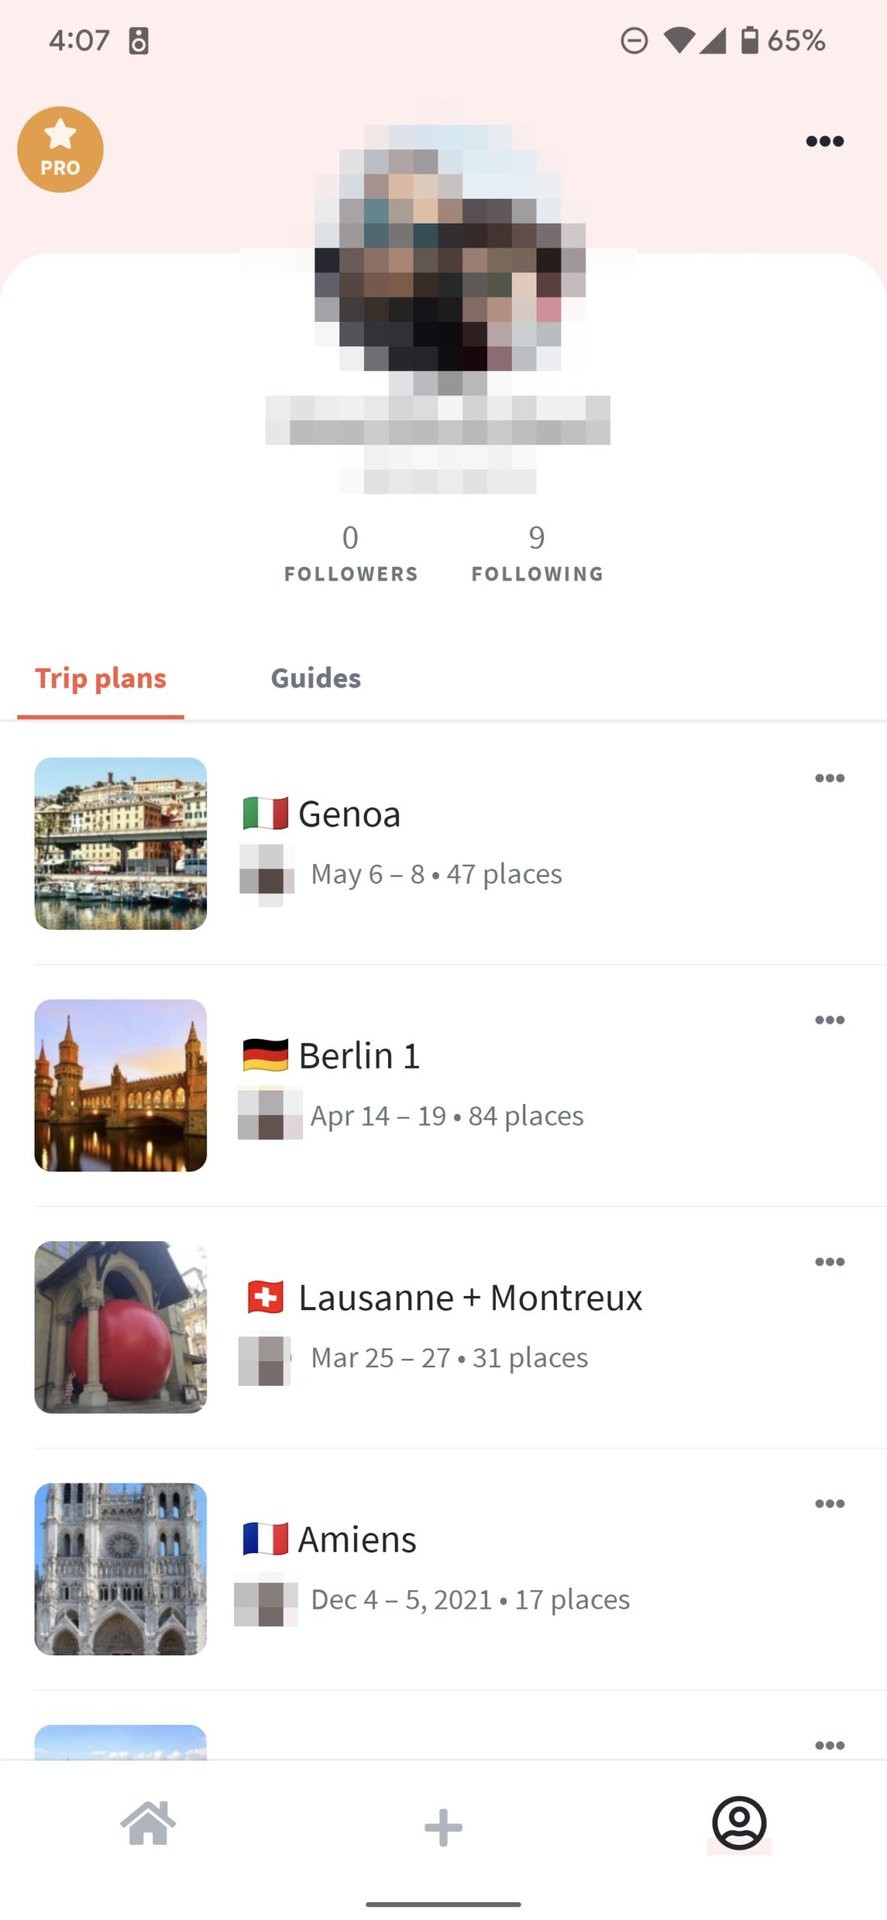 wanderlog travel planning app showing trip plans